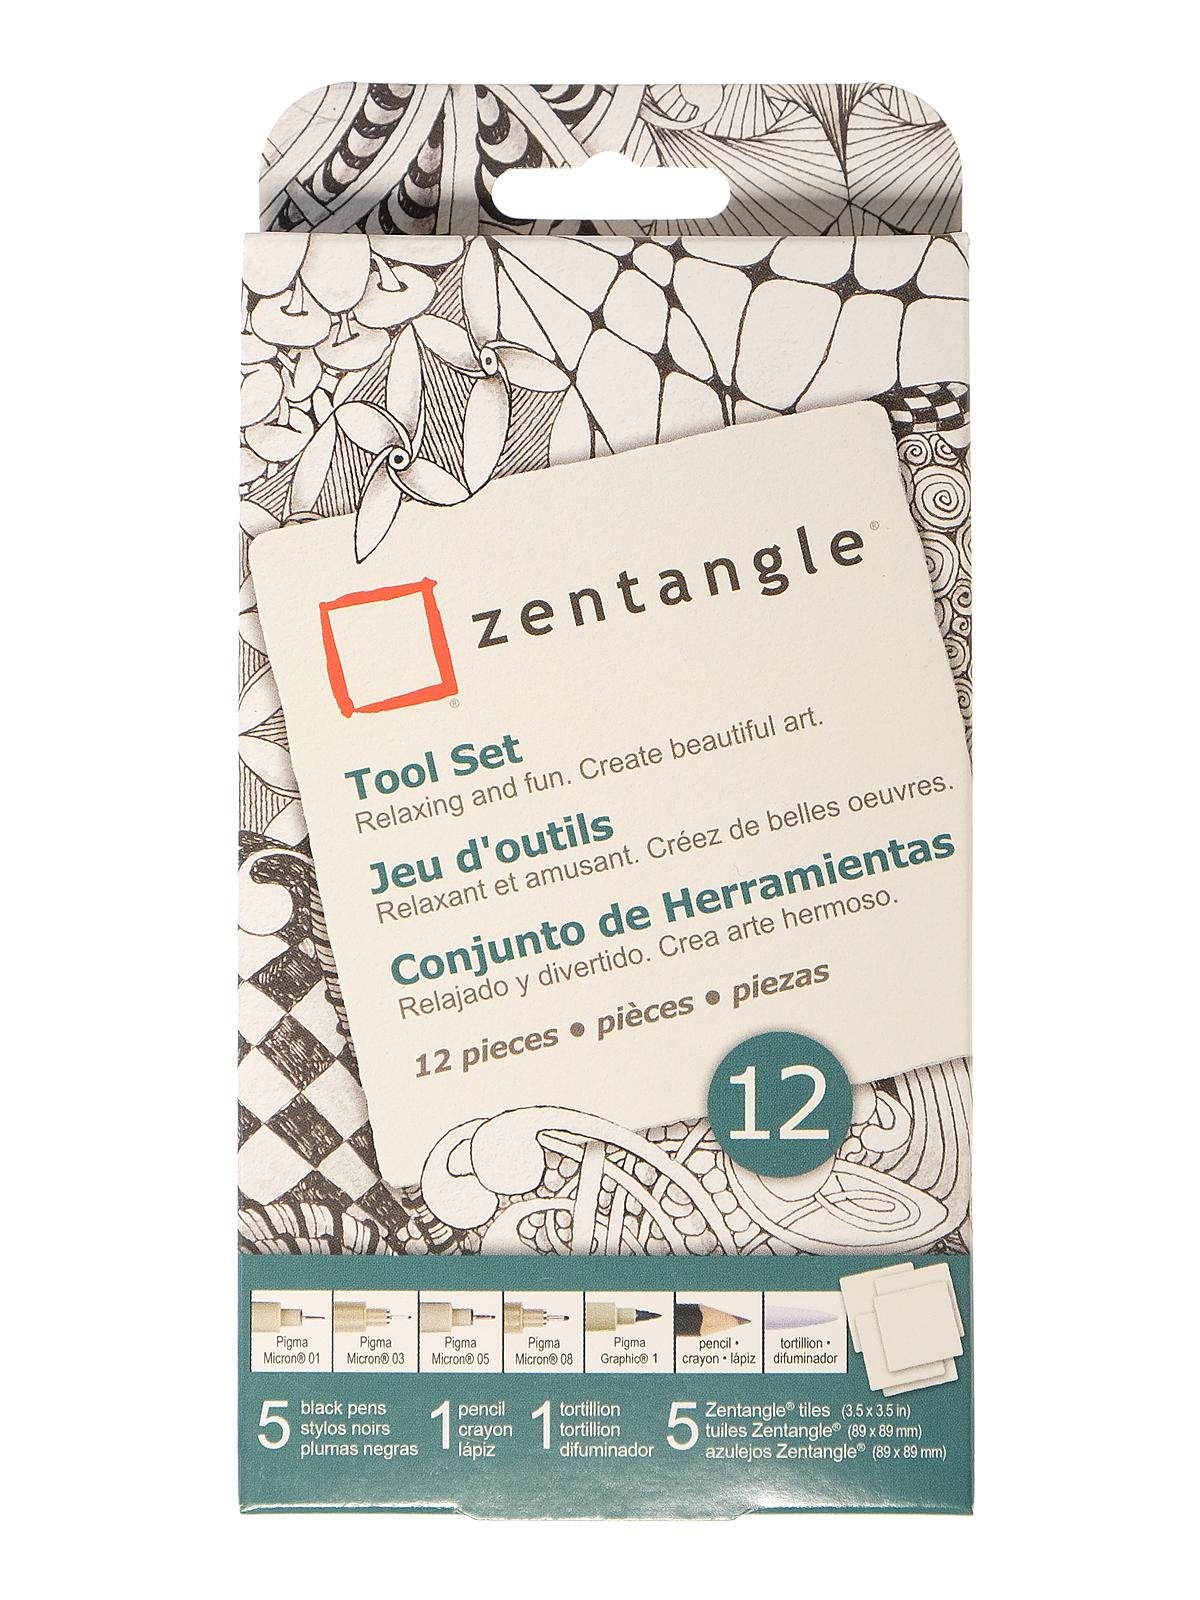 New Tangle Pattern Bullnose & Zentangle® Renaissance Tool Set Review  #Zentangle #SakuraOfAmerica #TanglePatterns